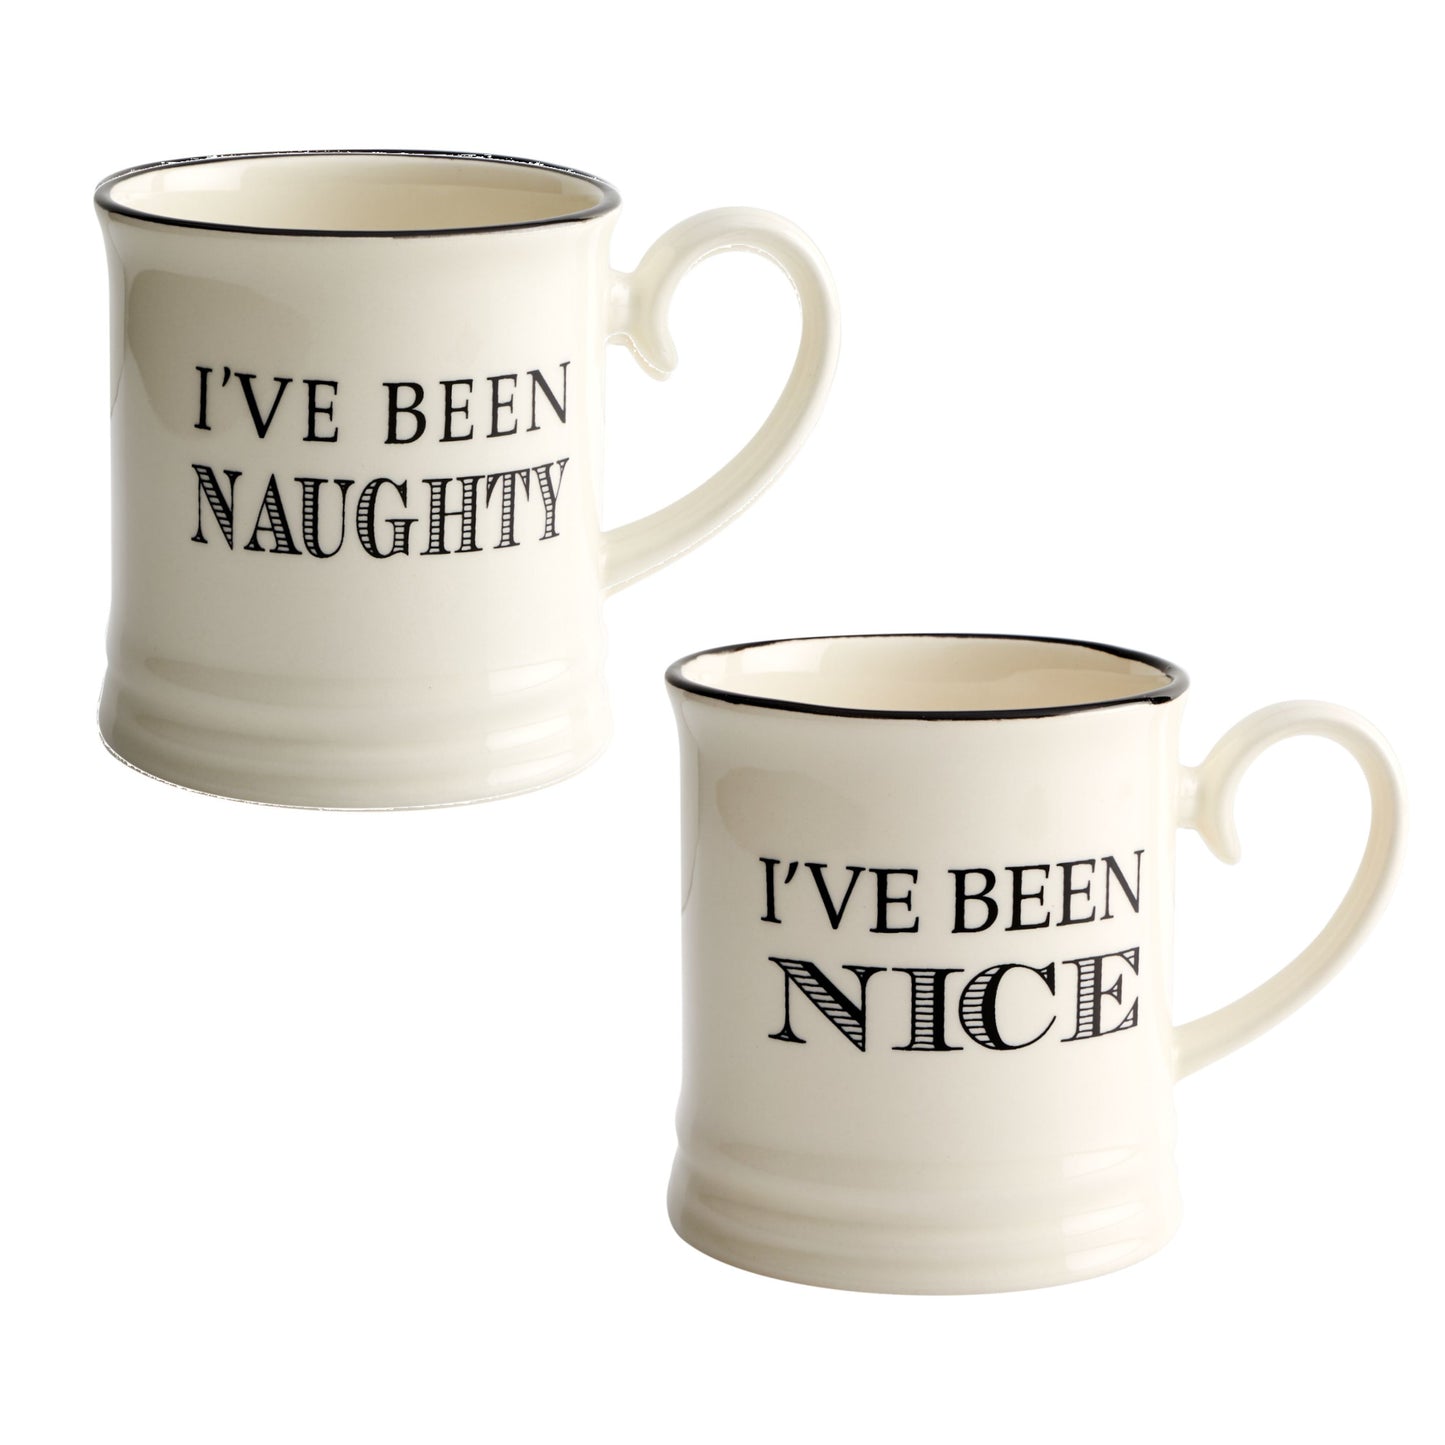 Fairmont & Main Christmas Mug Pack - I've Been Naughty / Nice